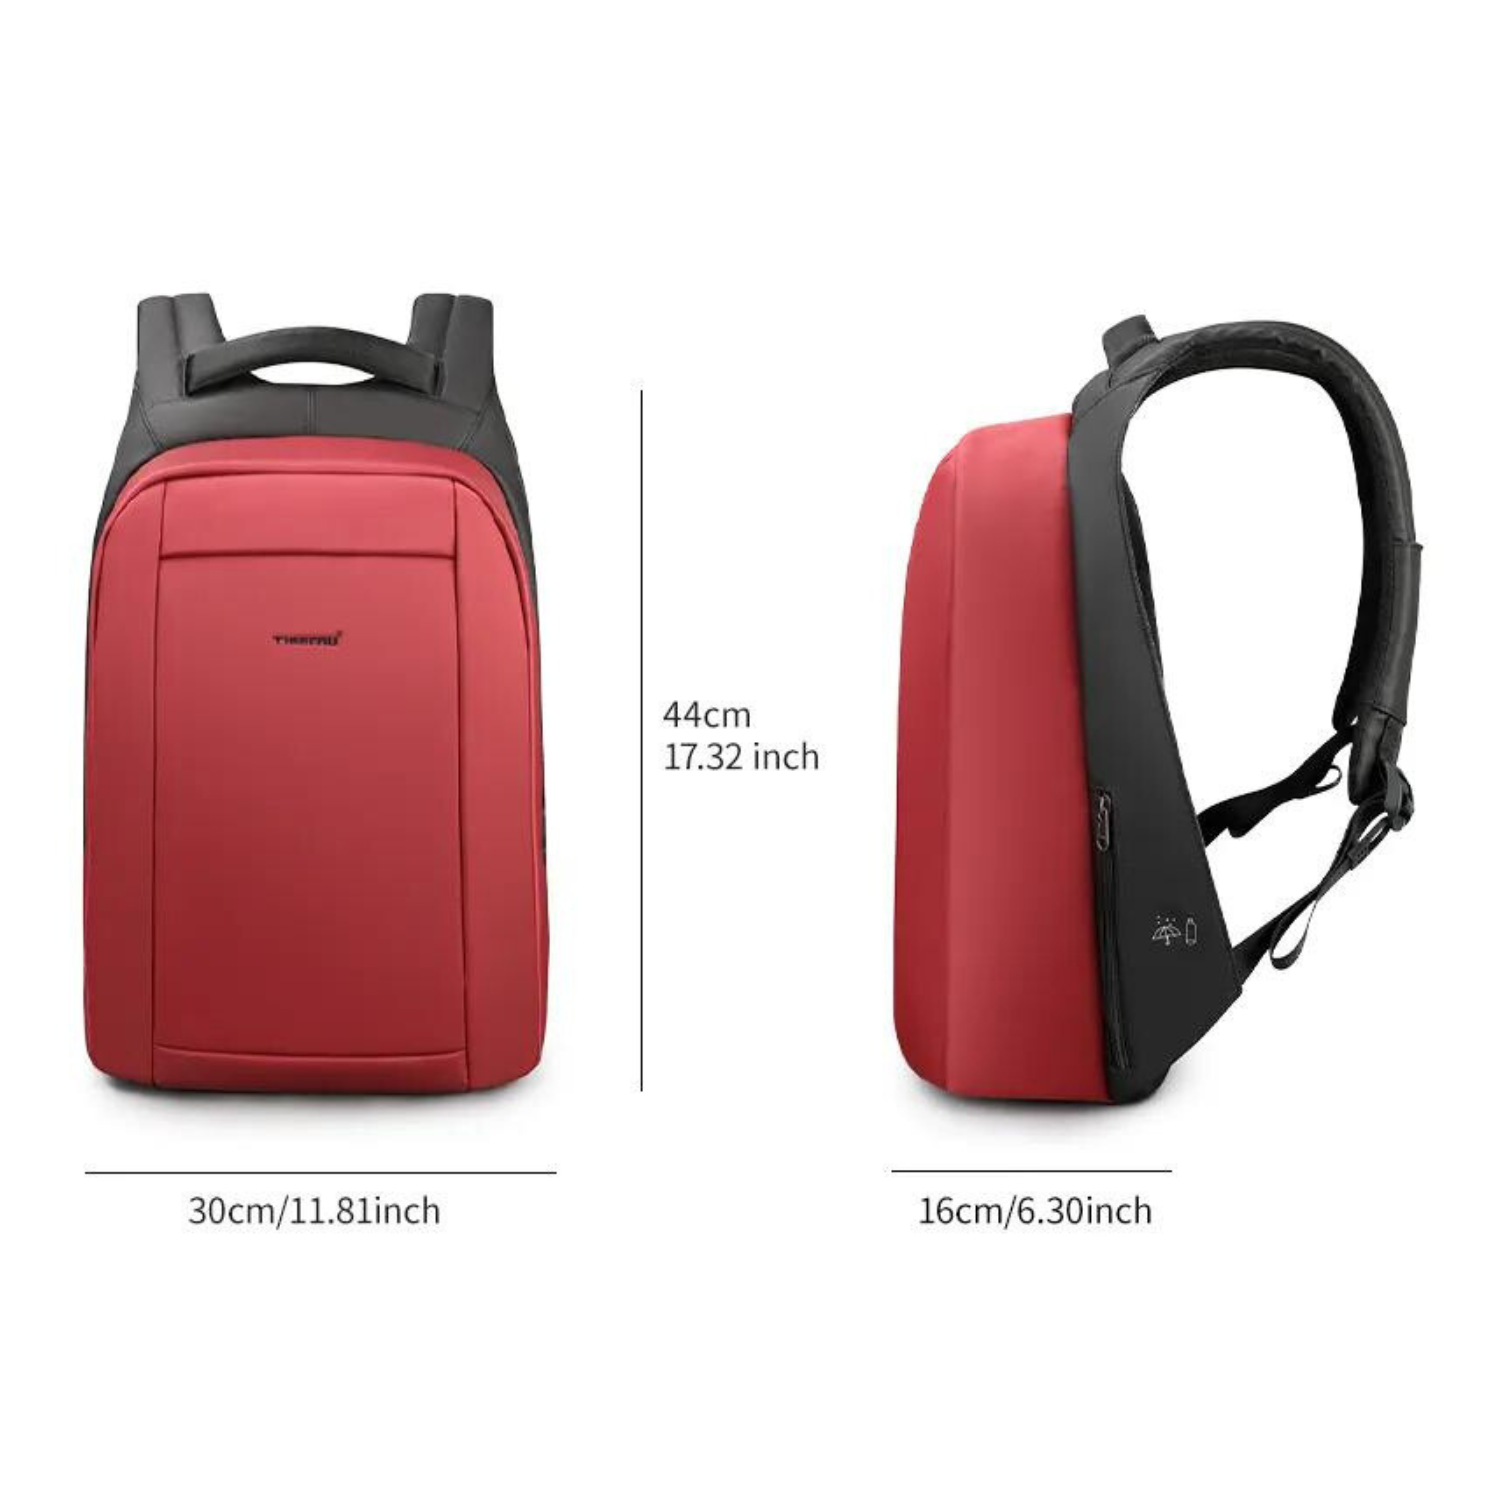 Robust & Versatile Urban Commuter Backpack